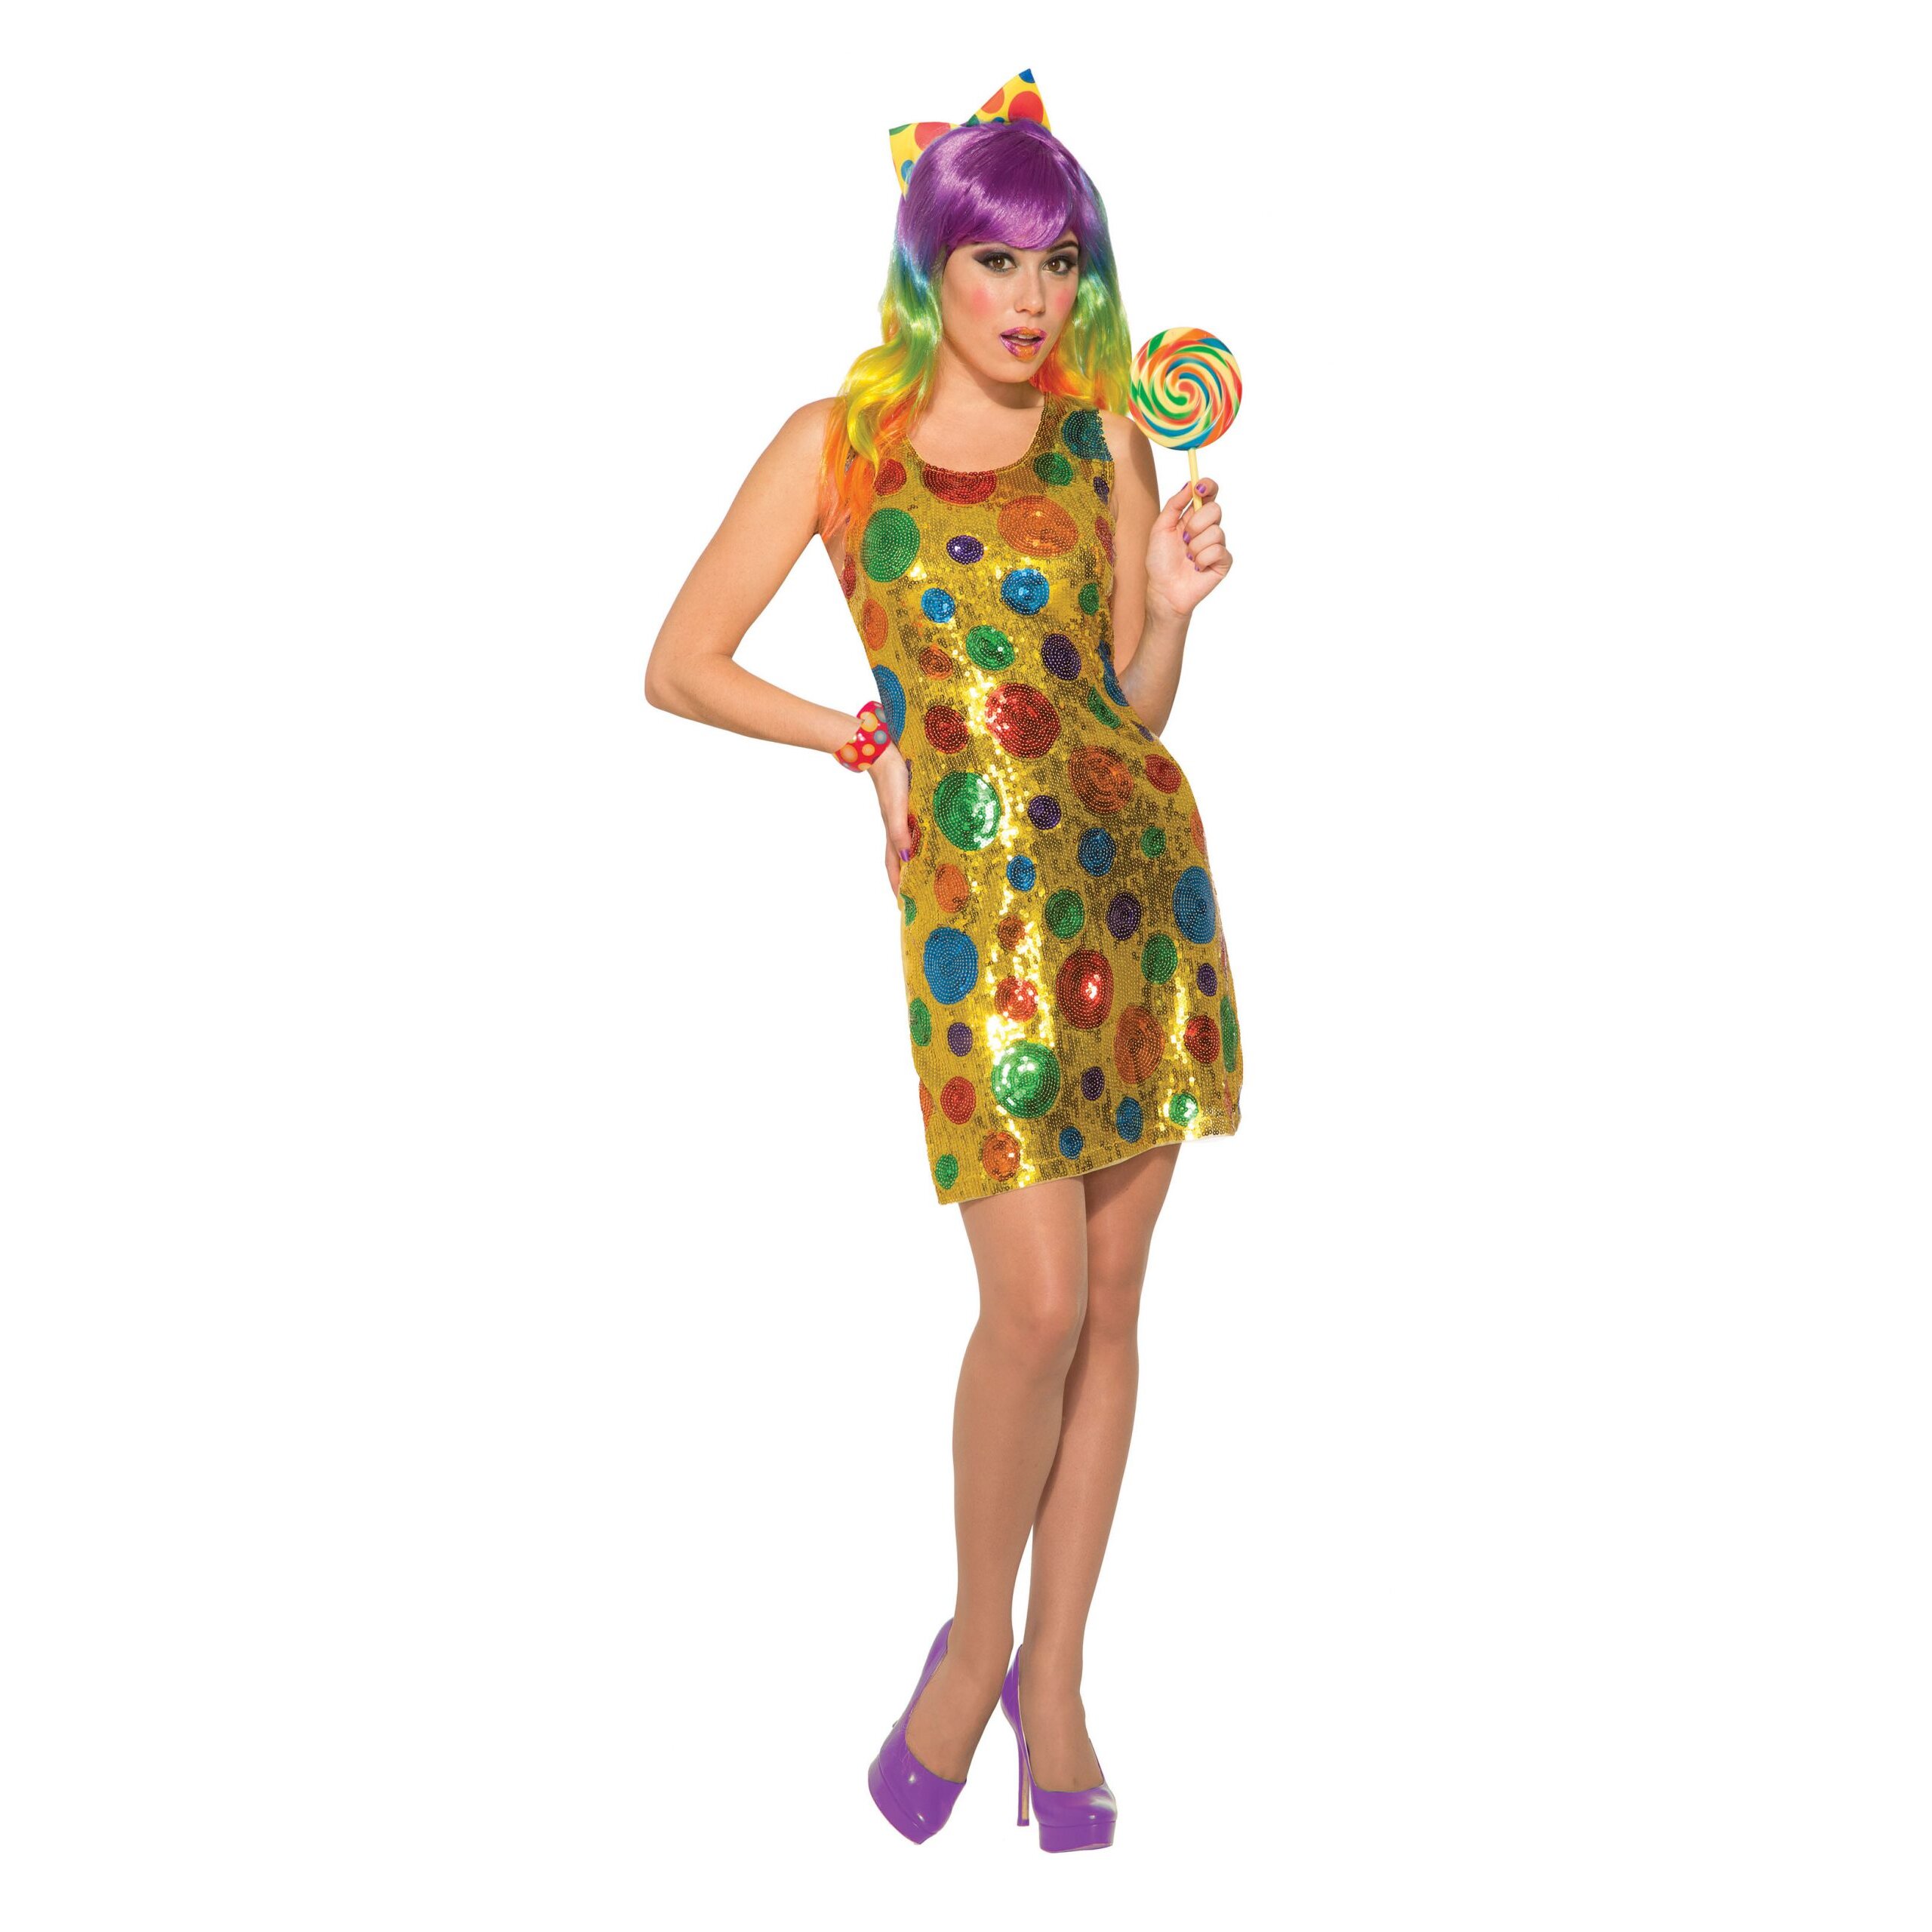 Official Forum AC79280 Ladies Clown Polka Dot Sequin Dress Standard Adult Costumes